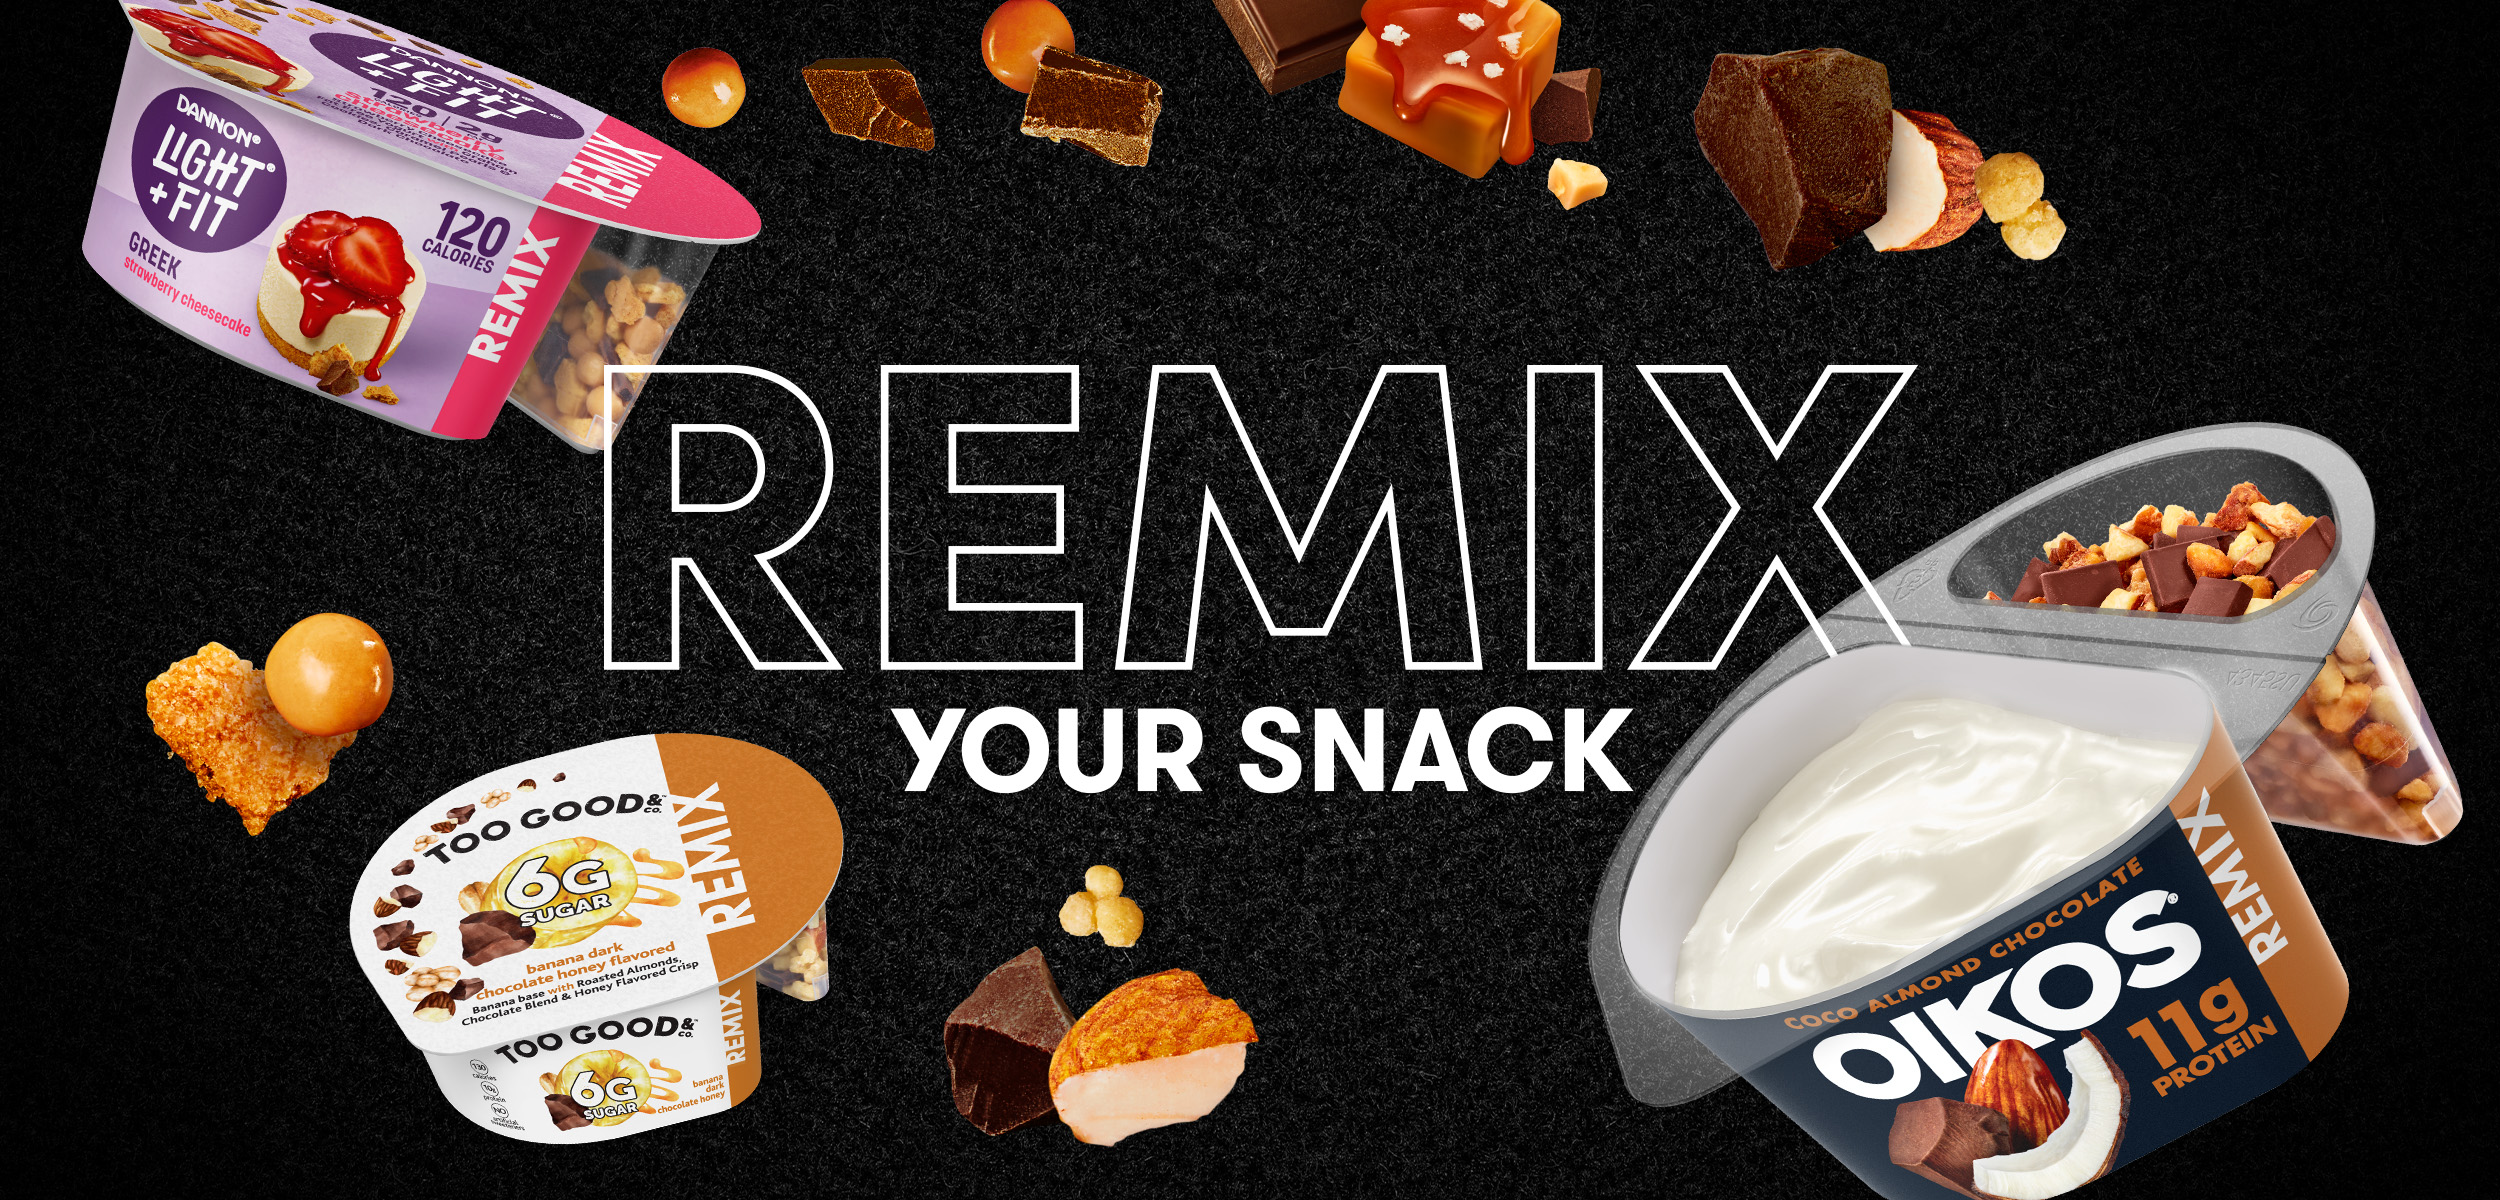 Dannon remix your snack